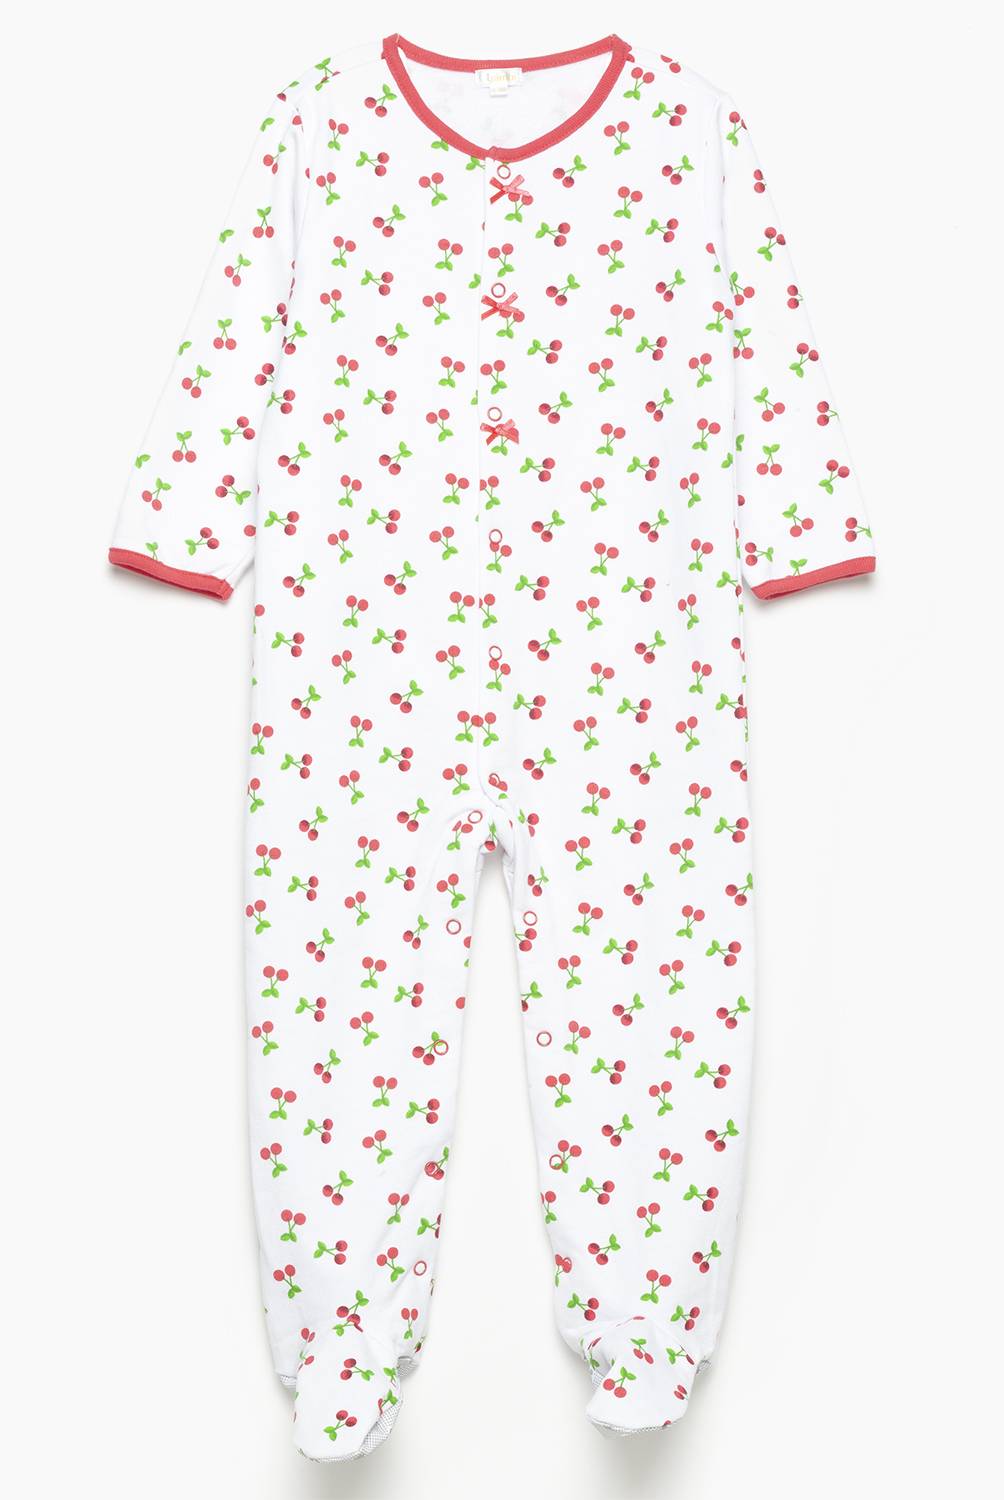 YAMP - Pijama Print Algodón Bebé Niña